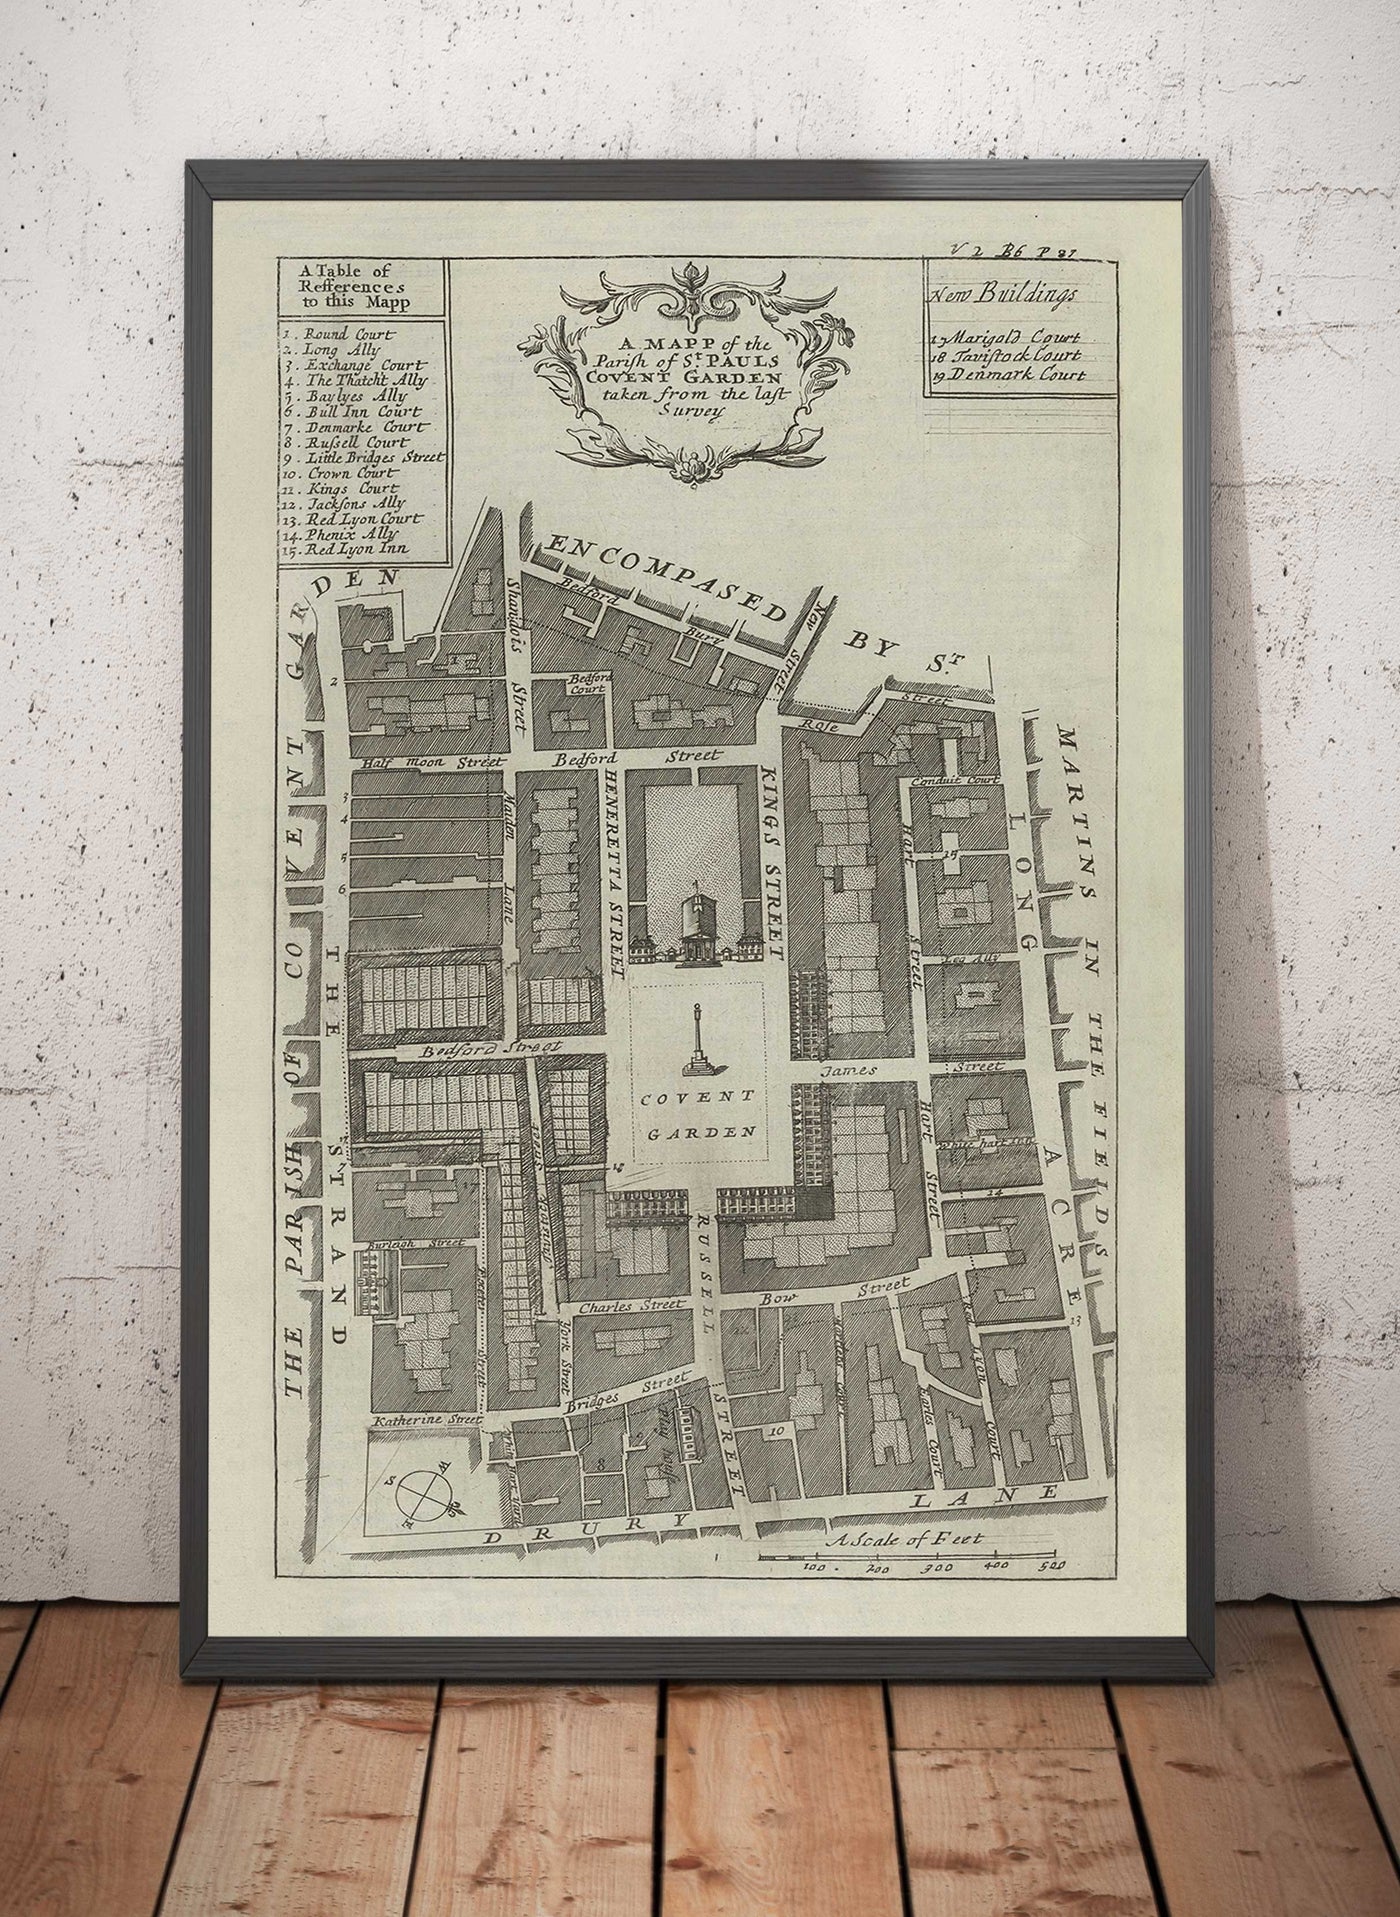 Mapa antiguo de Covent Garden, 1720 por Strype Stow - Londres, Iglesia de San Pablo, King Street, Strand, West End